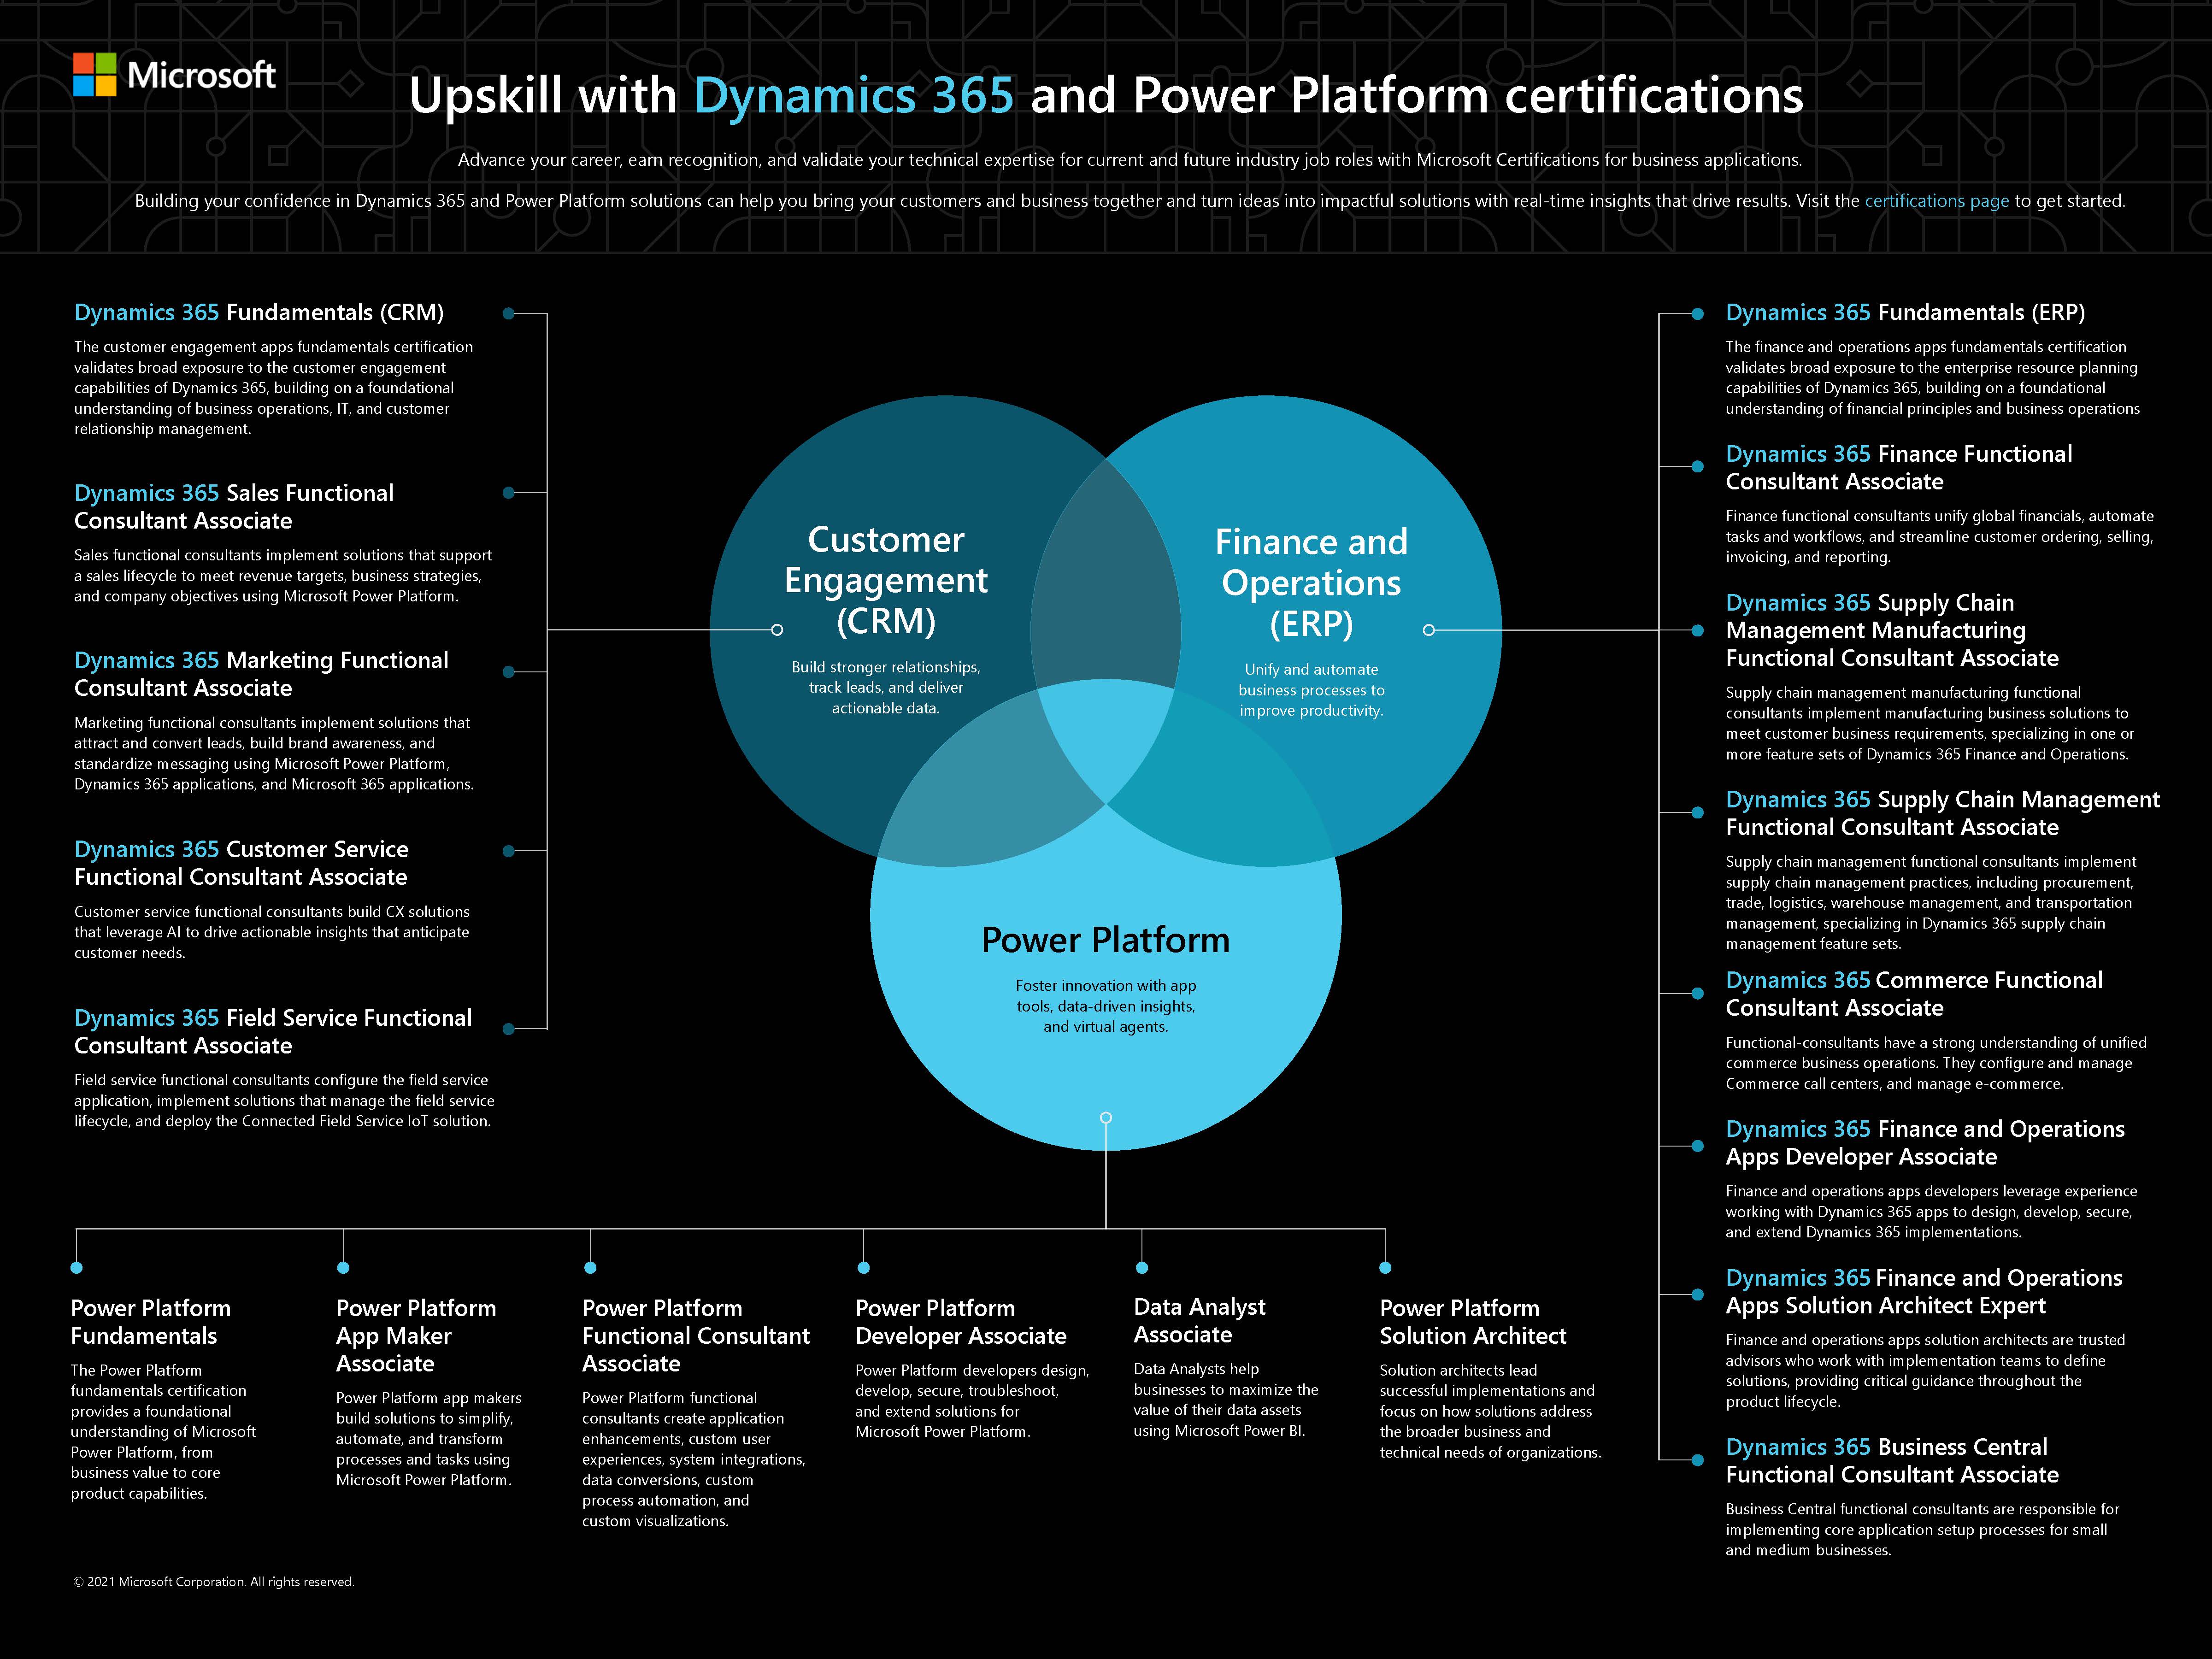 Microsoft Dynamics 365 & Power Platform Certifications image